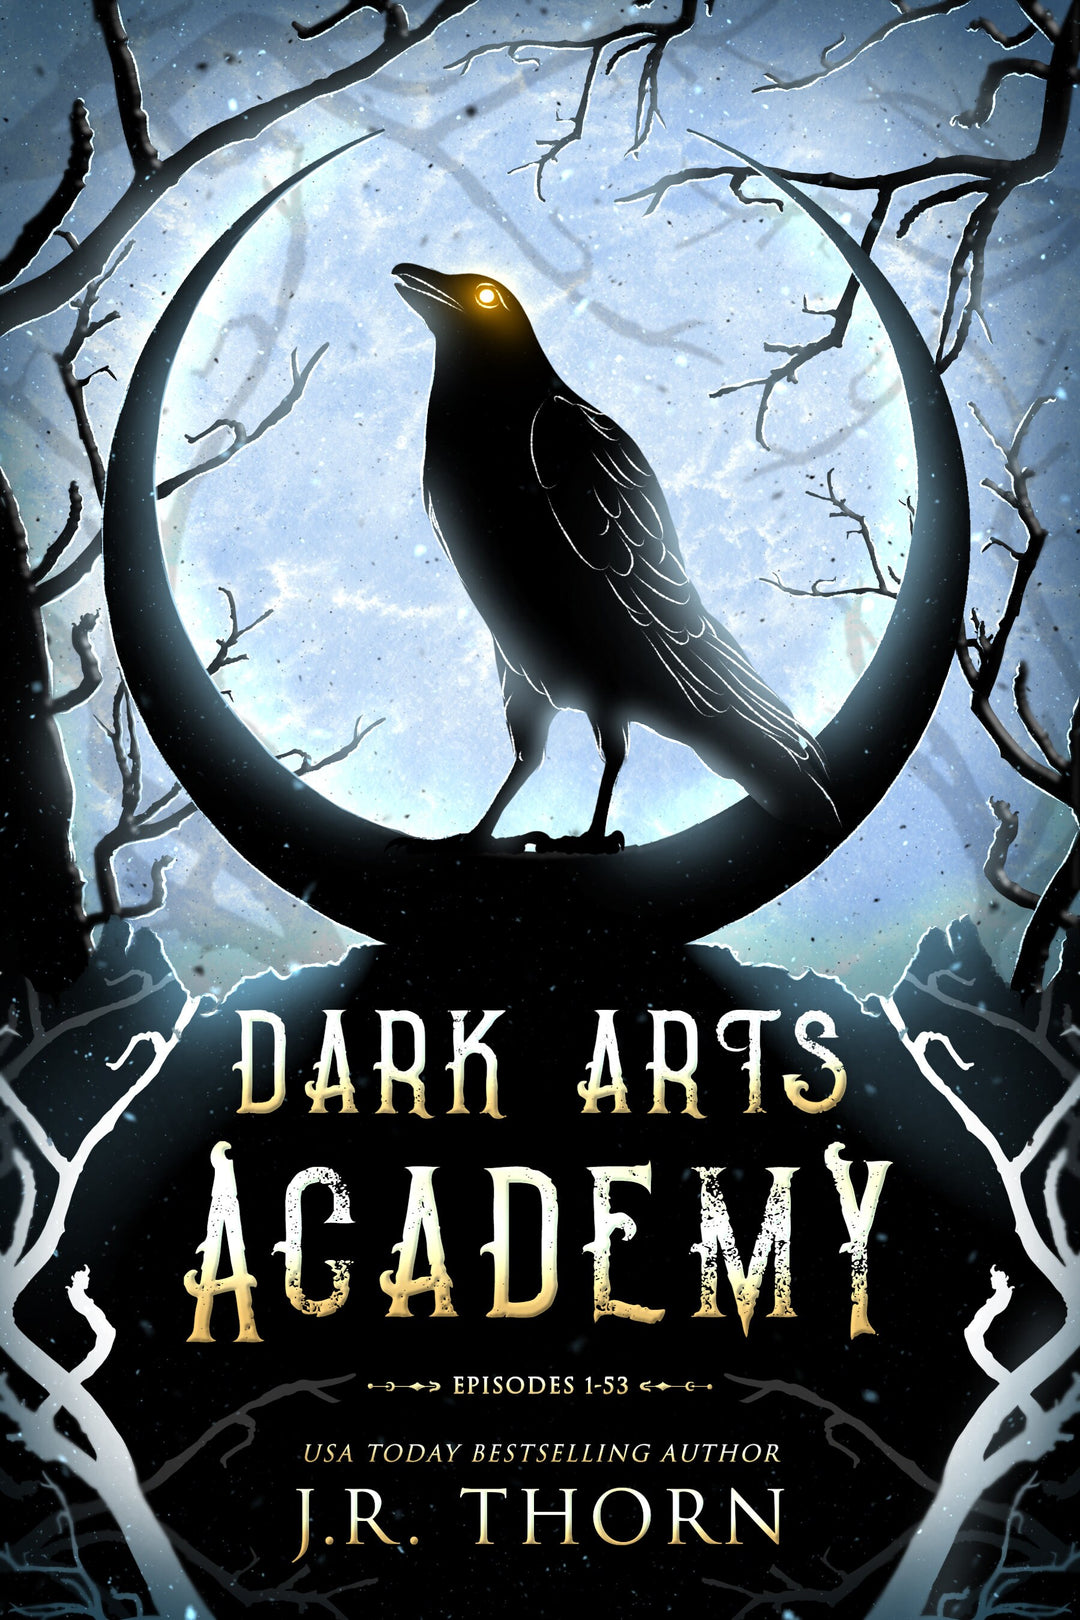 Dark Arts Academy: Part I HARDCOVER SIGNED Edition